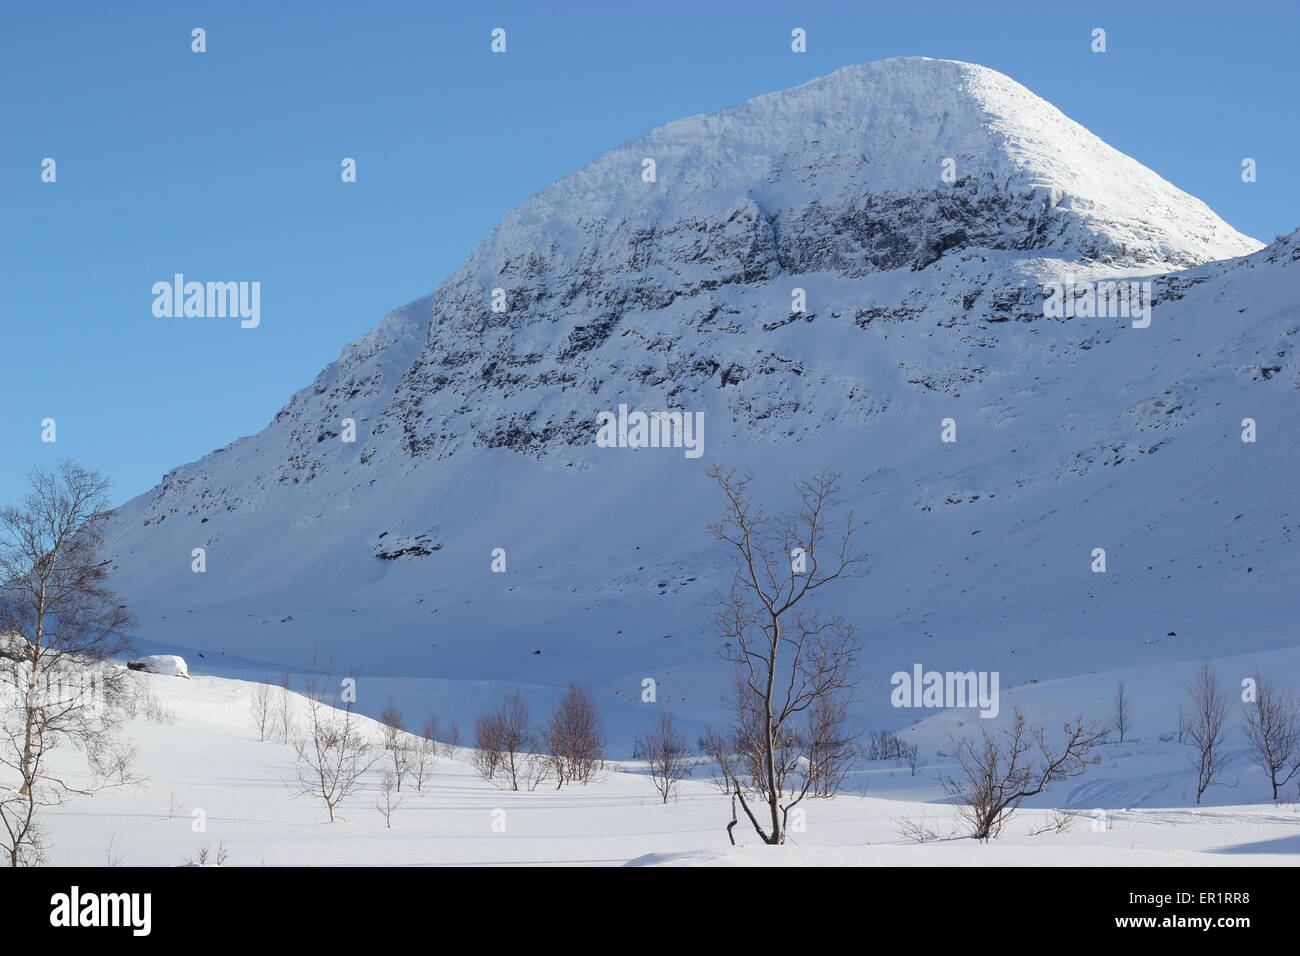 Montagne coperte di neve e alberi, Dapmotjavri, Norvegia Foto Stock